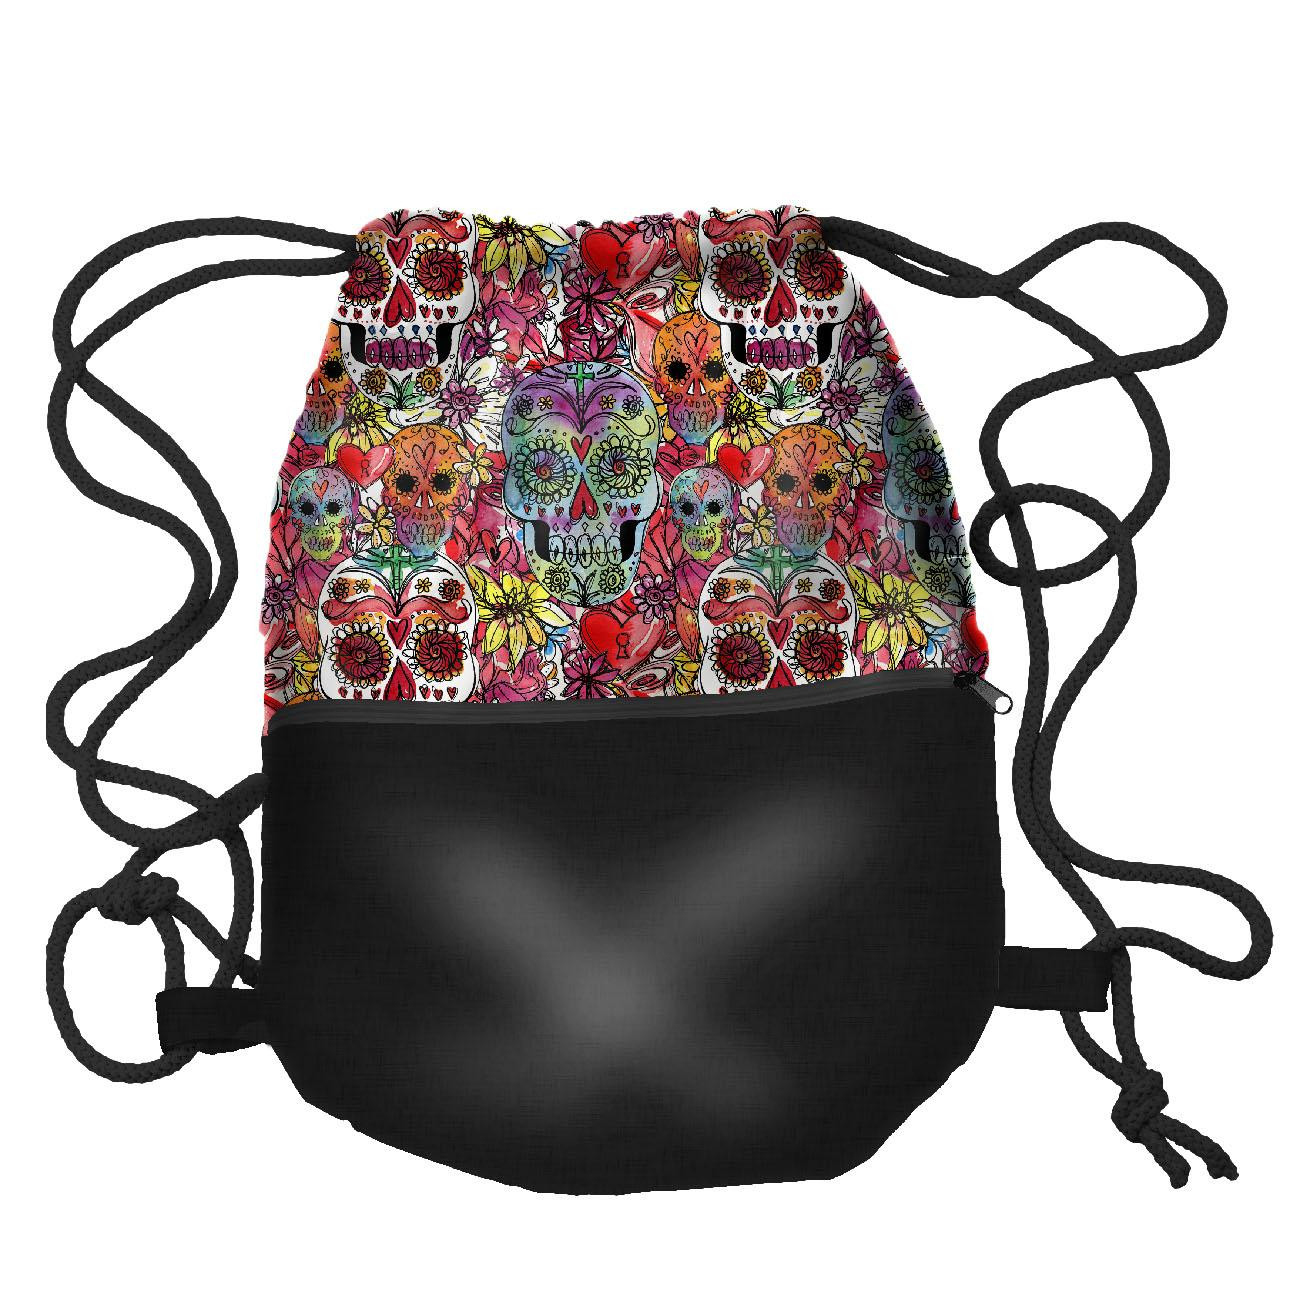 GYM BAG WITH POCKET - SKULLS pat. 4 / colorful (DIA DE LOS MUERTOS) - sewing set